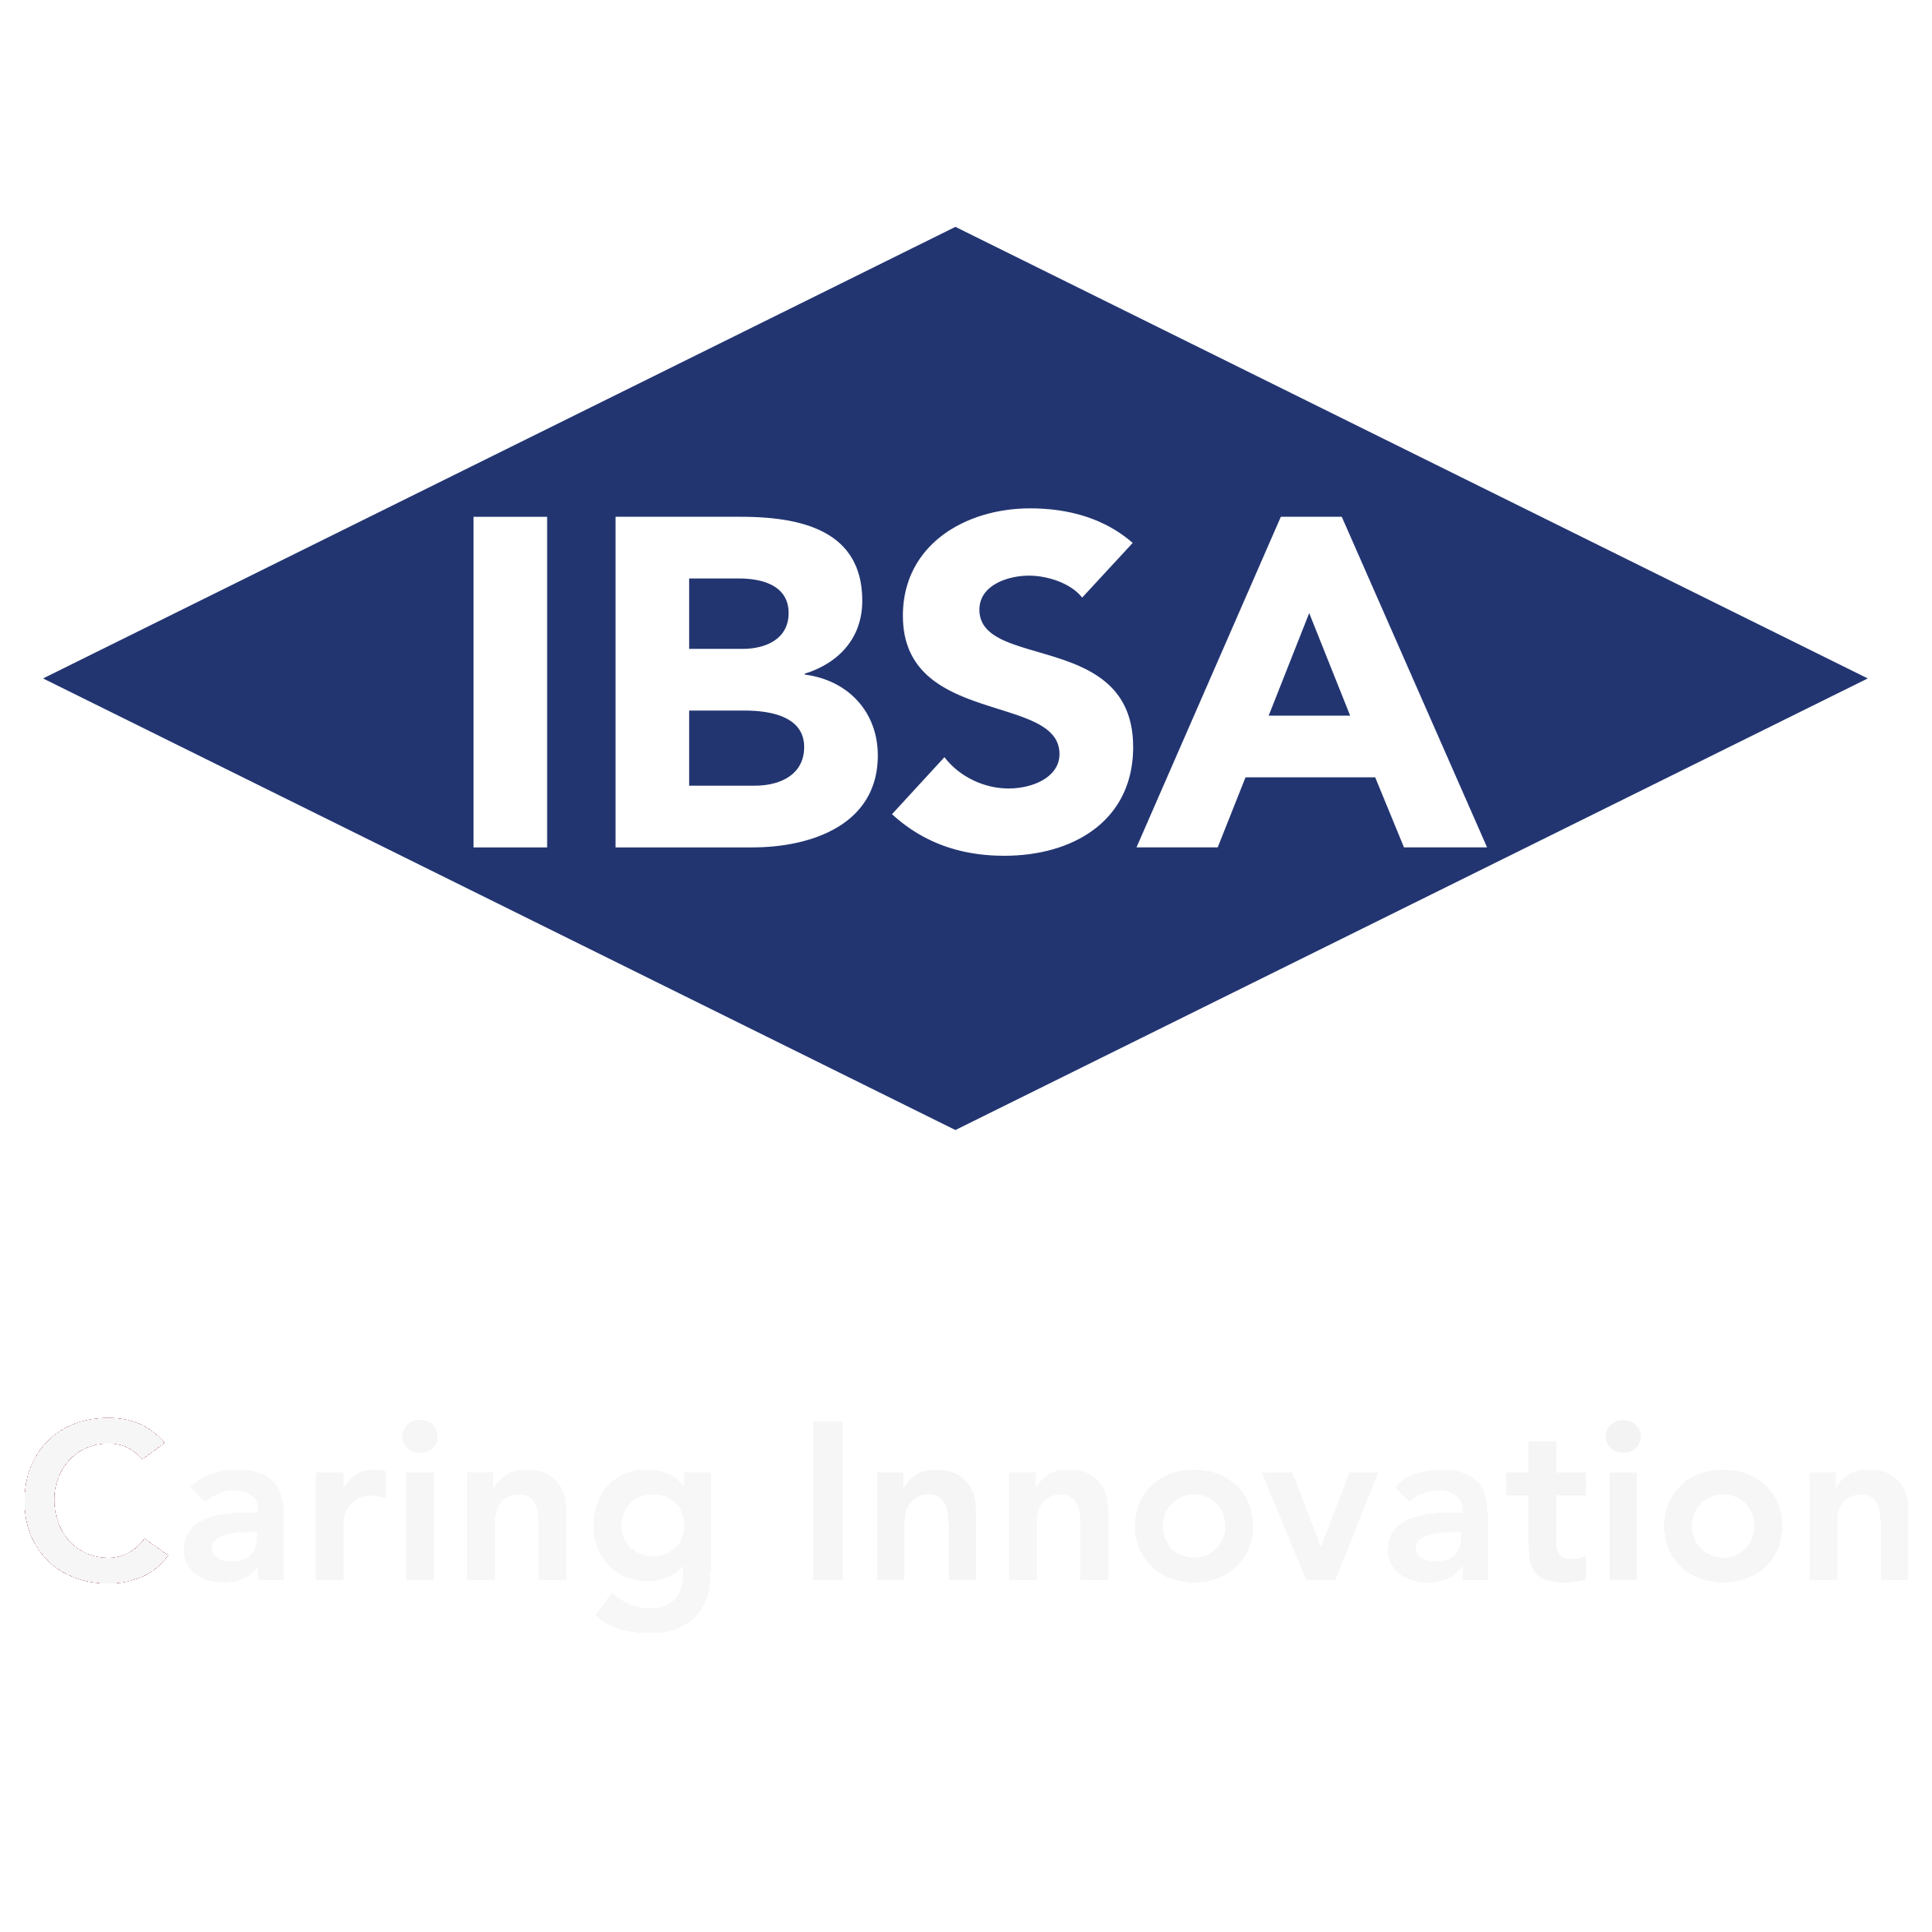 IBSA Hungary